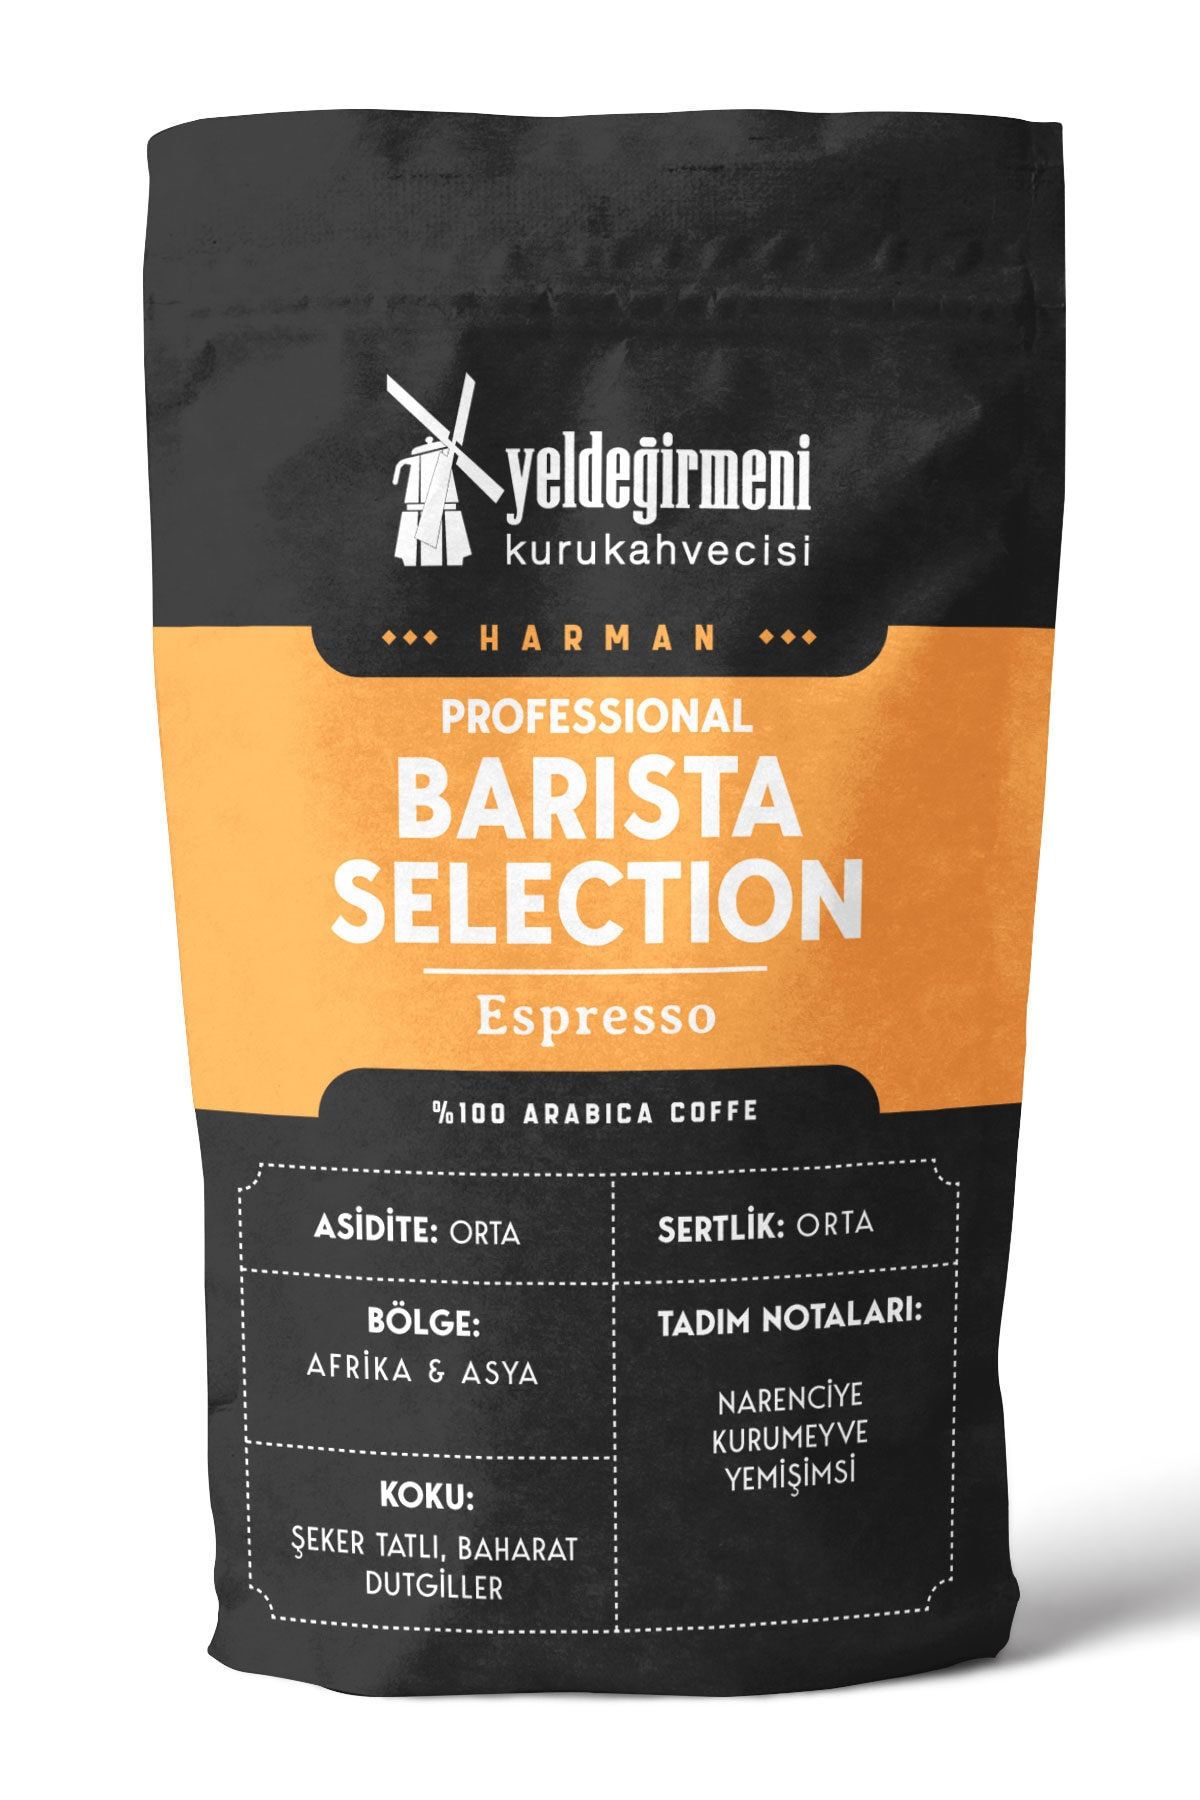 Yeldeğirmeni Kurukahvecisi Professional Barista Selection (ESPRESSO COFFEE) Espresso Kahve 1000 gr